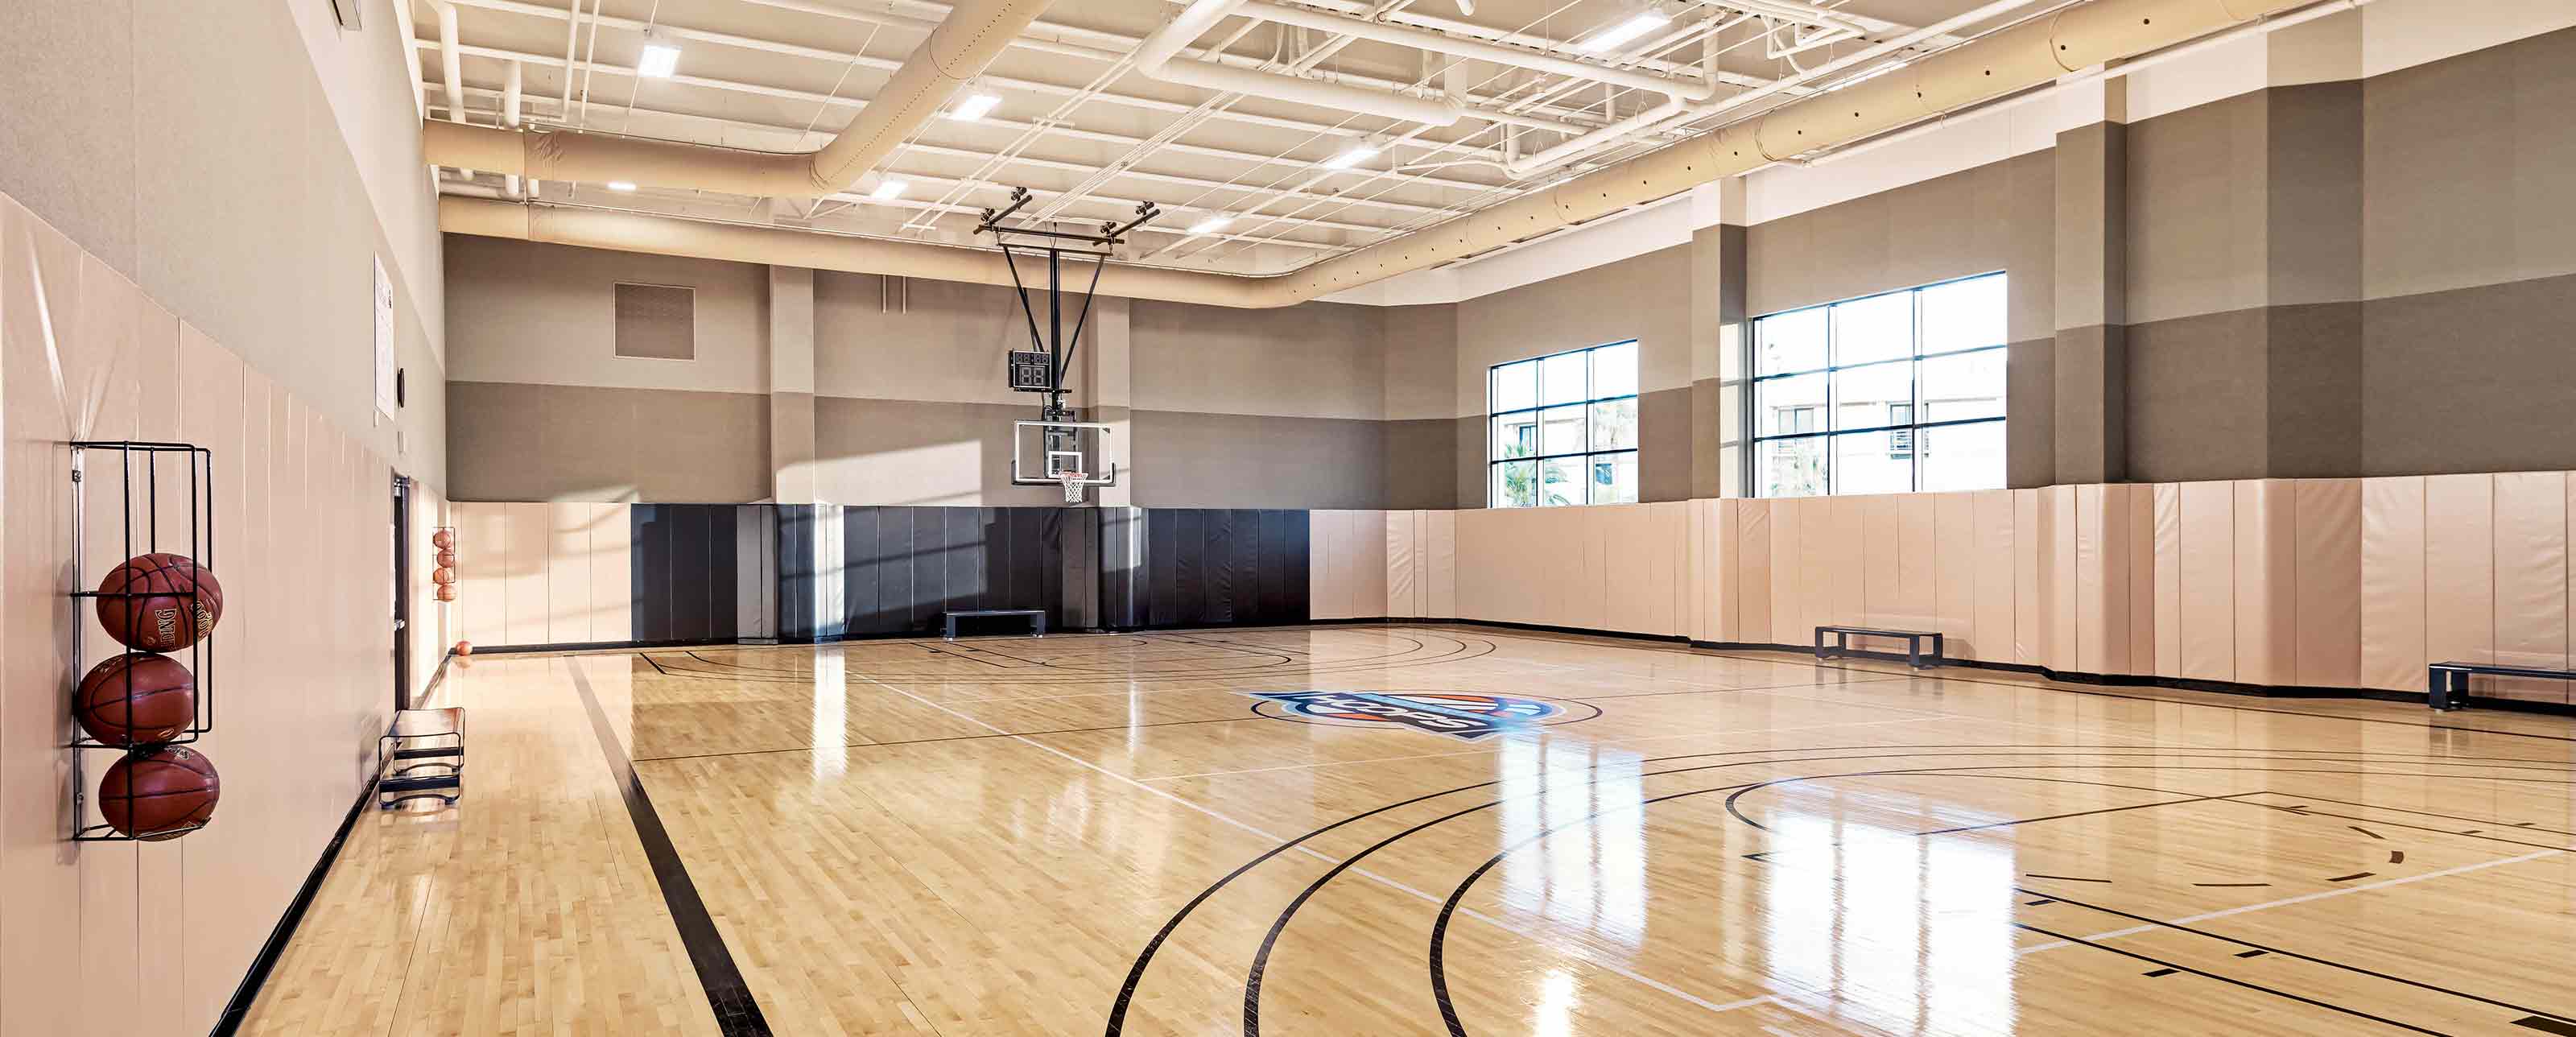 a gleaming basketball court and gymnasium